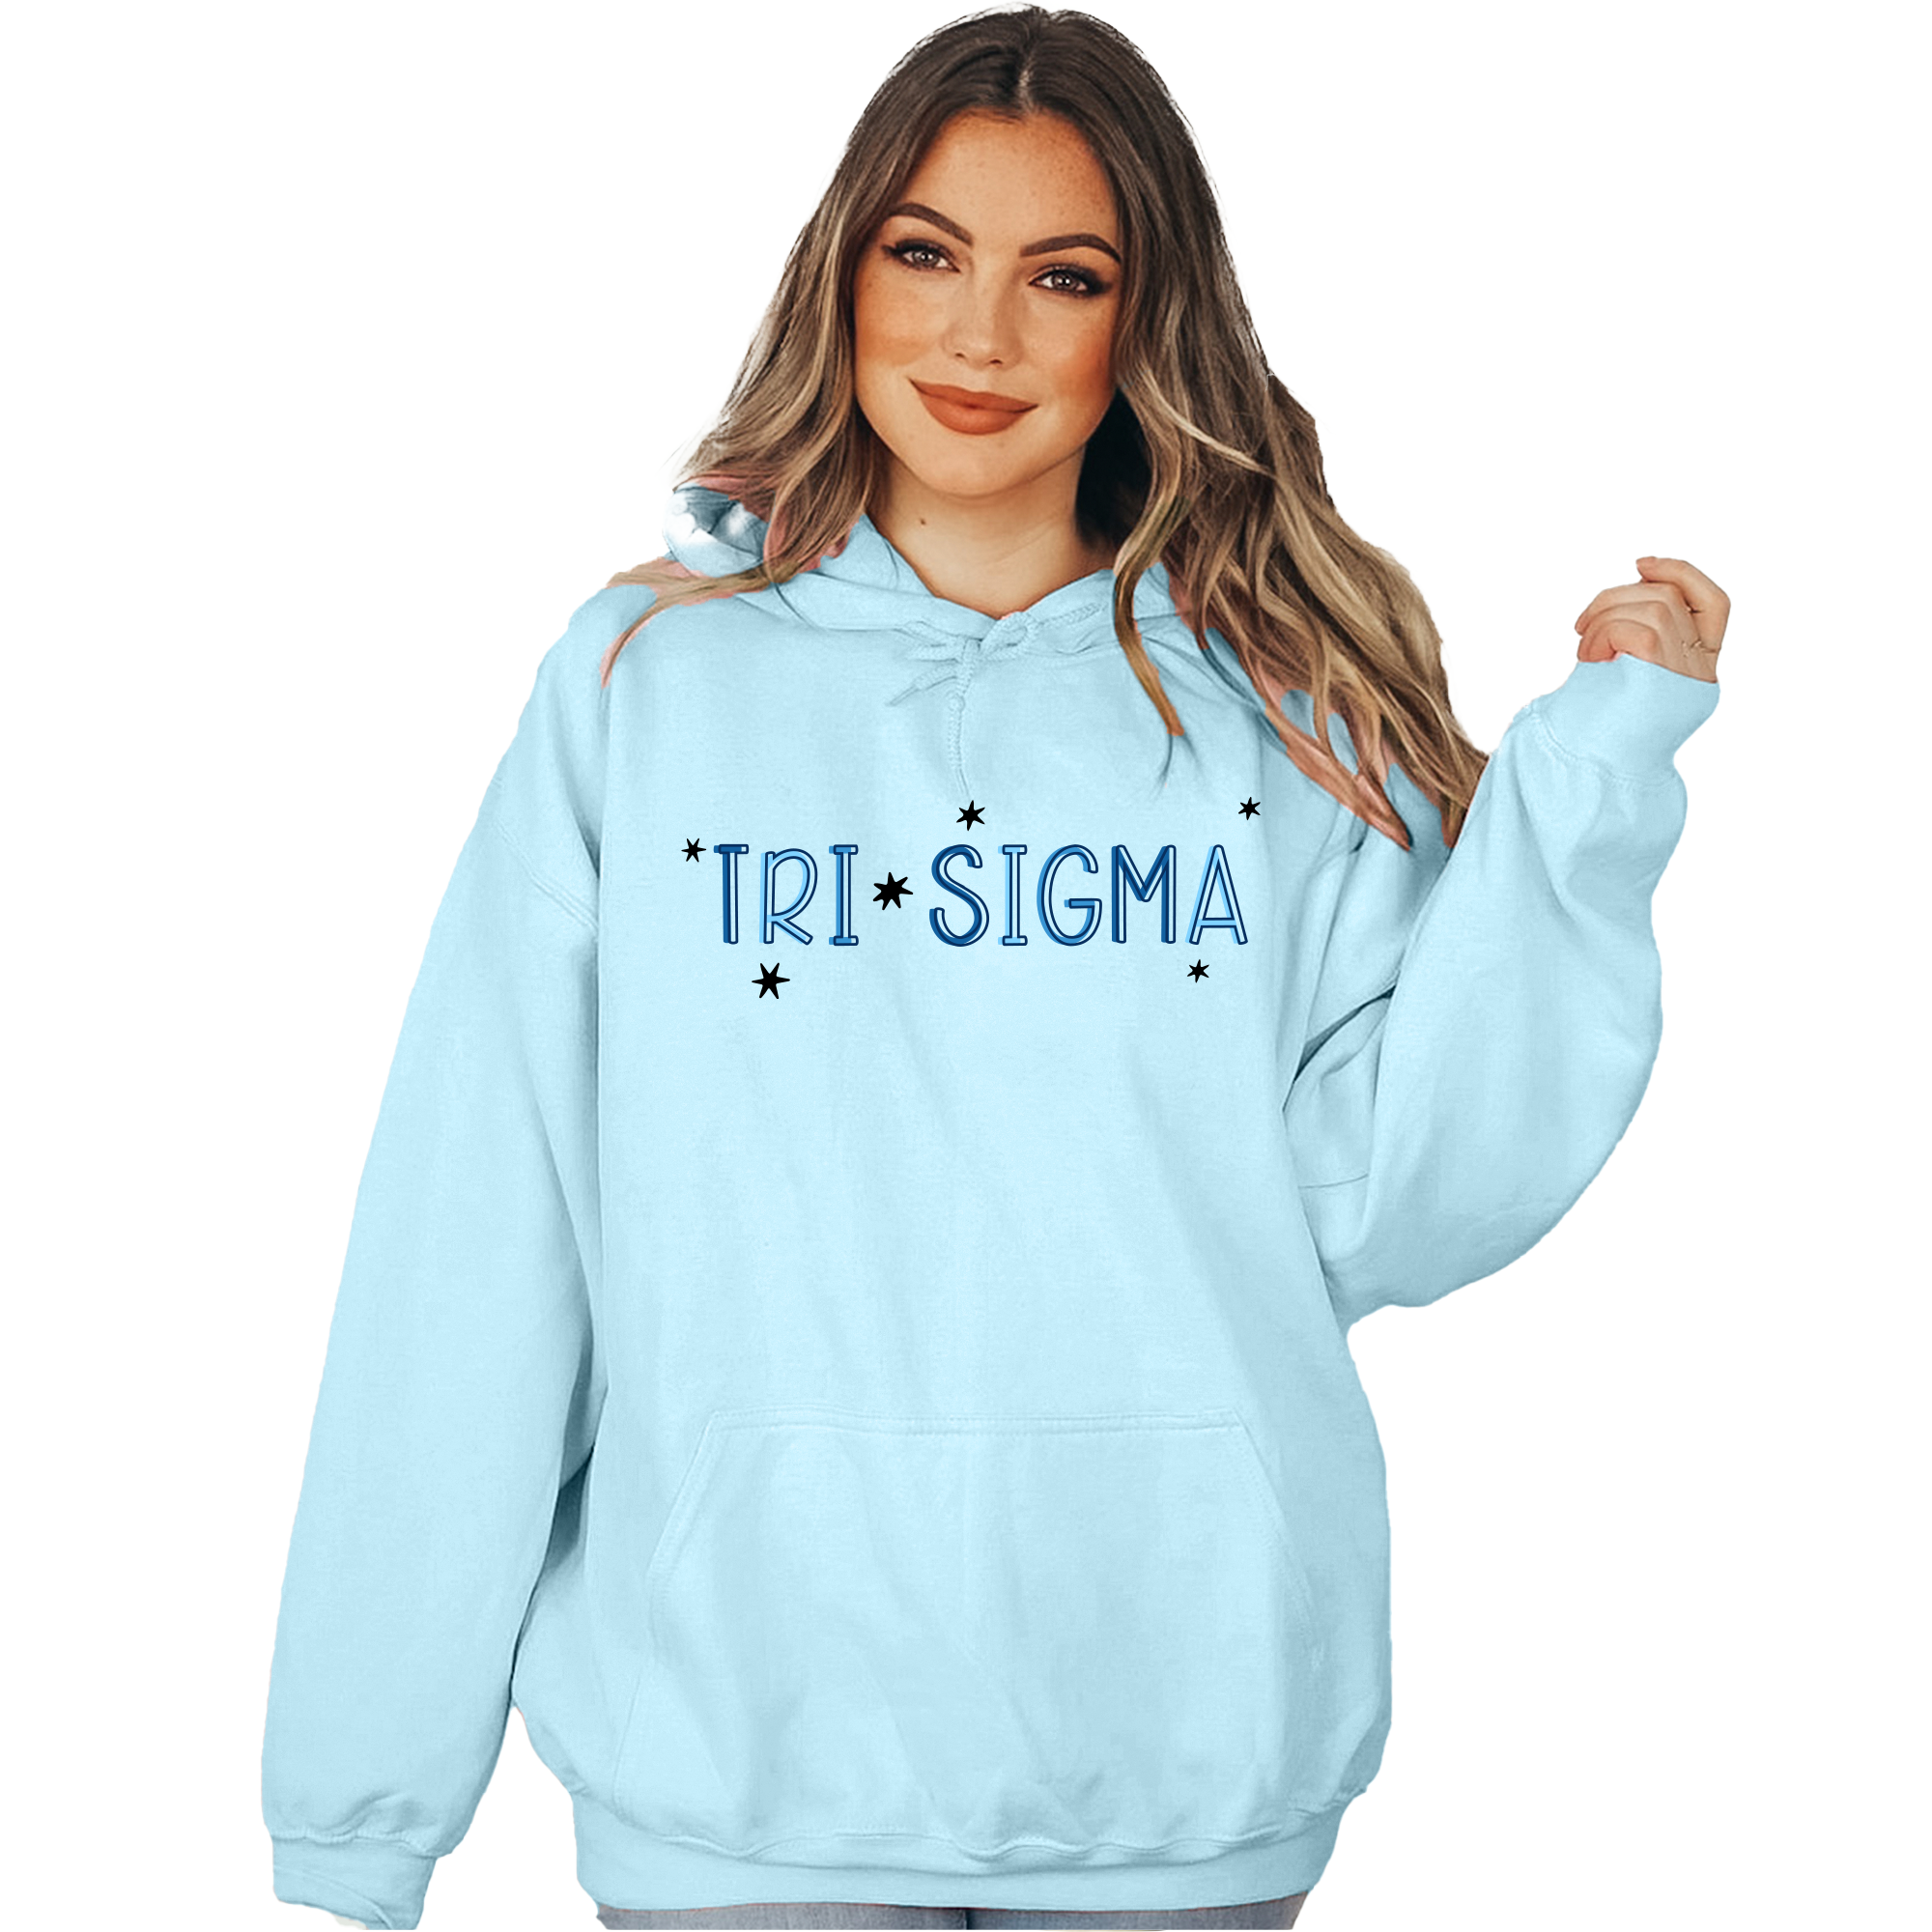 Sigma Sigma Sigma Hoodie - Tri Sigma, Sparkle, Blue Hoodie, Greek Apparel, Big Little Reveal, Initiation - Go Greek Chic